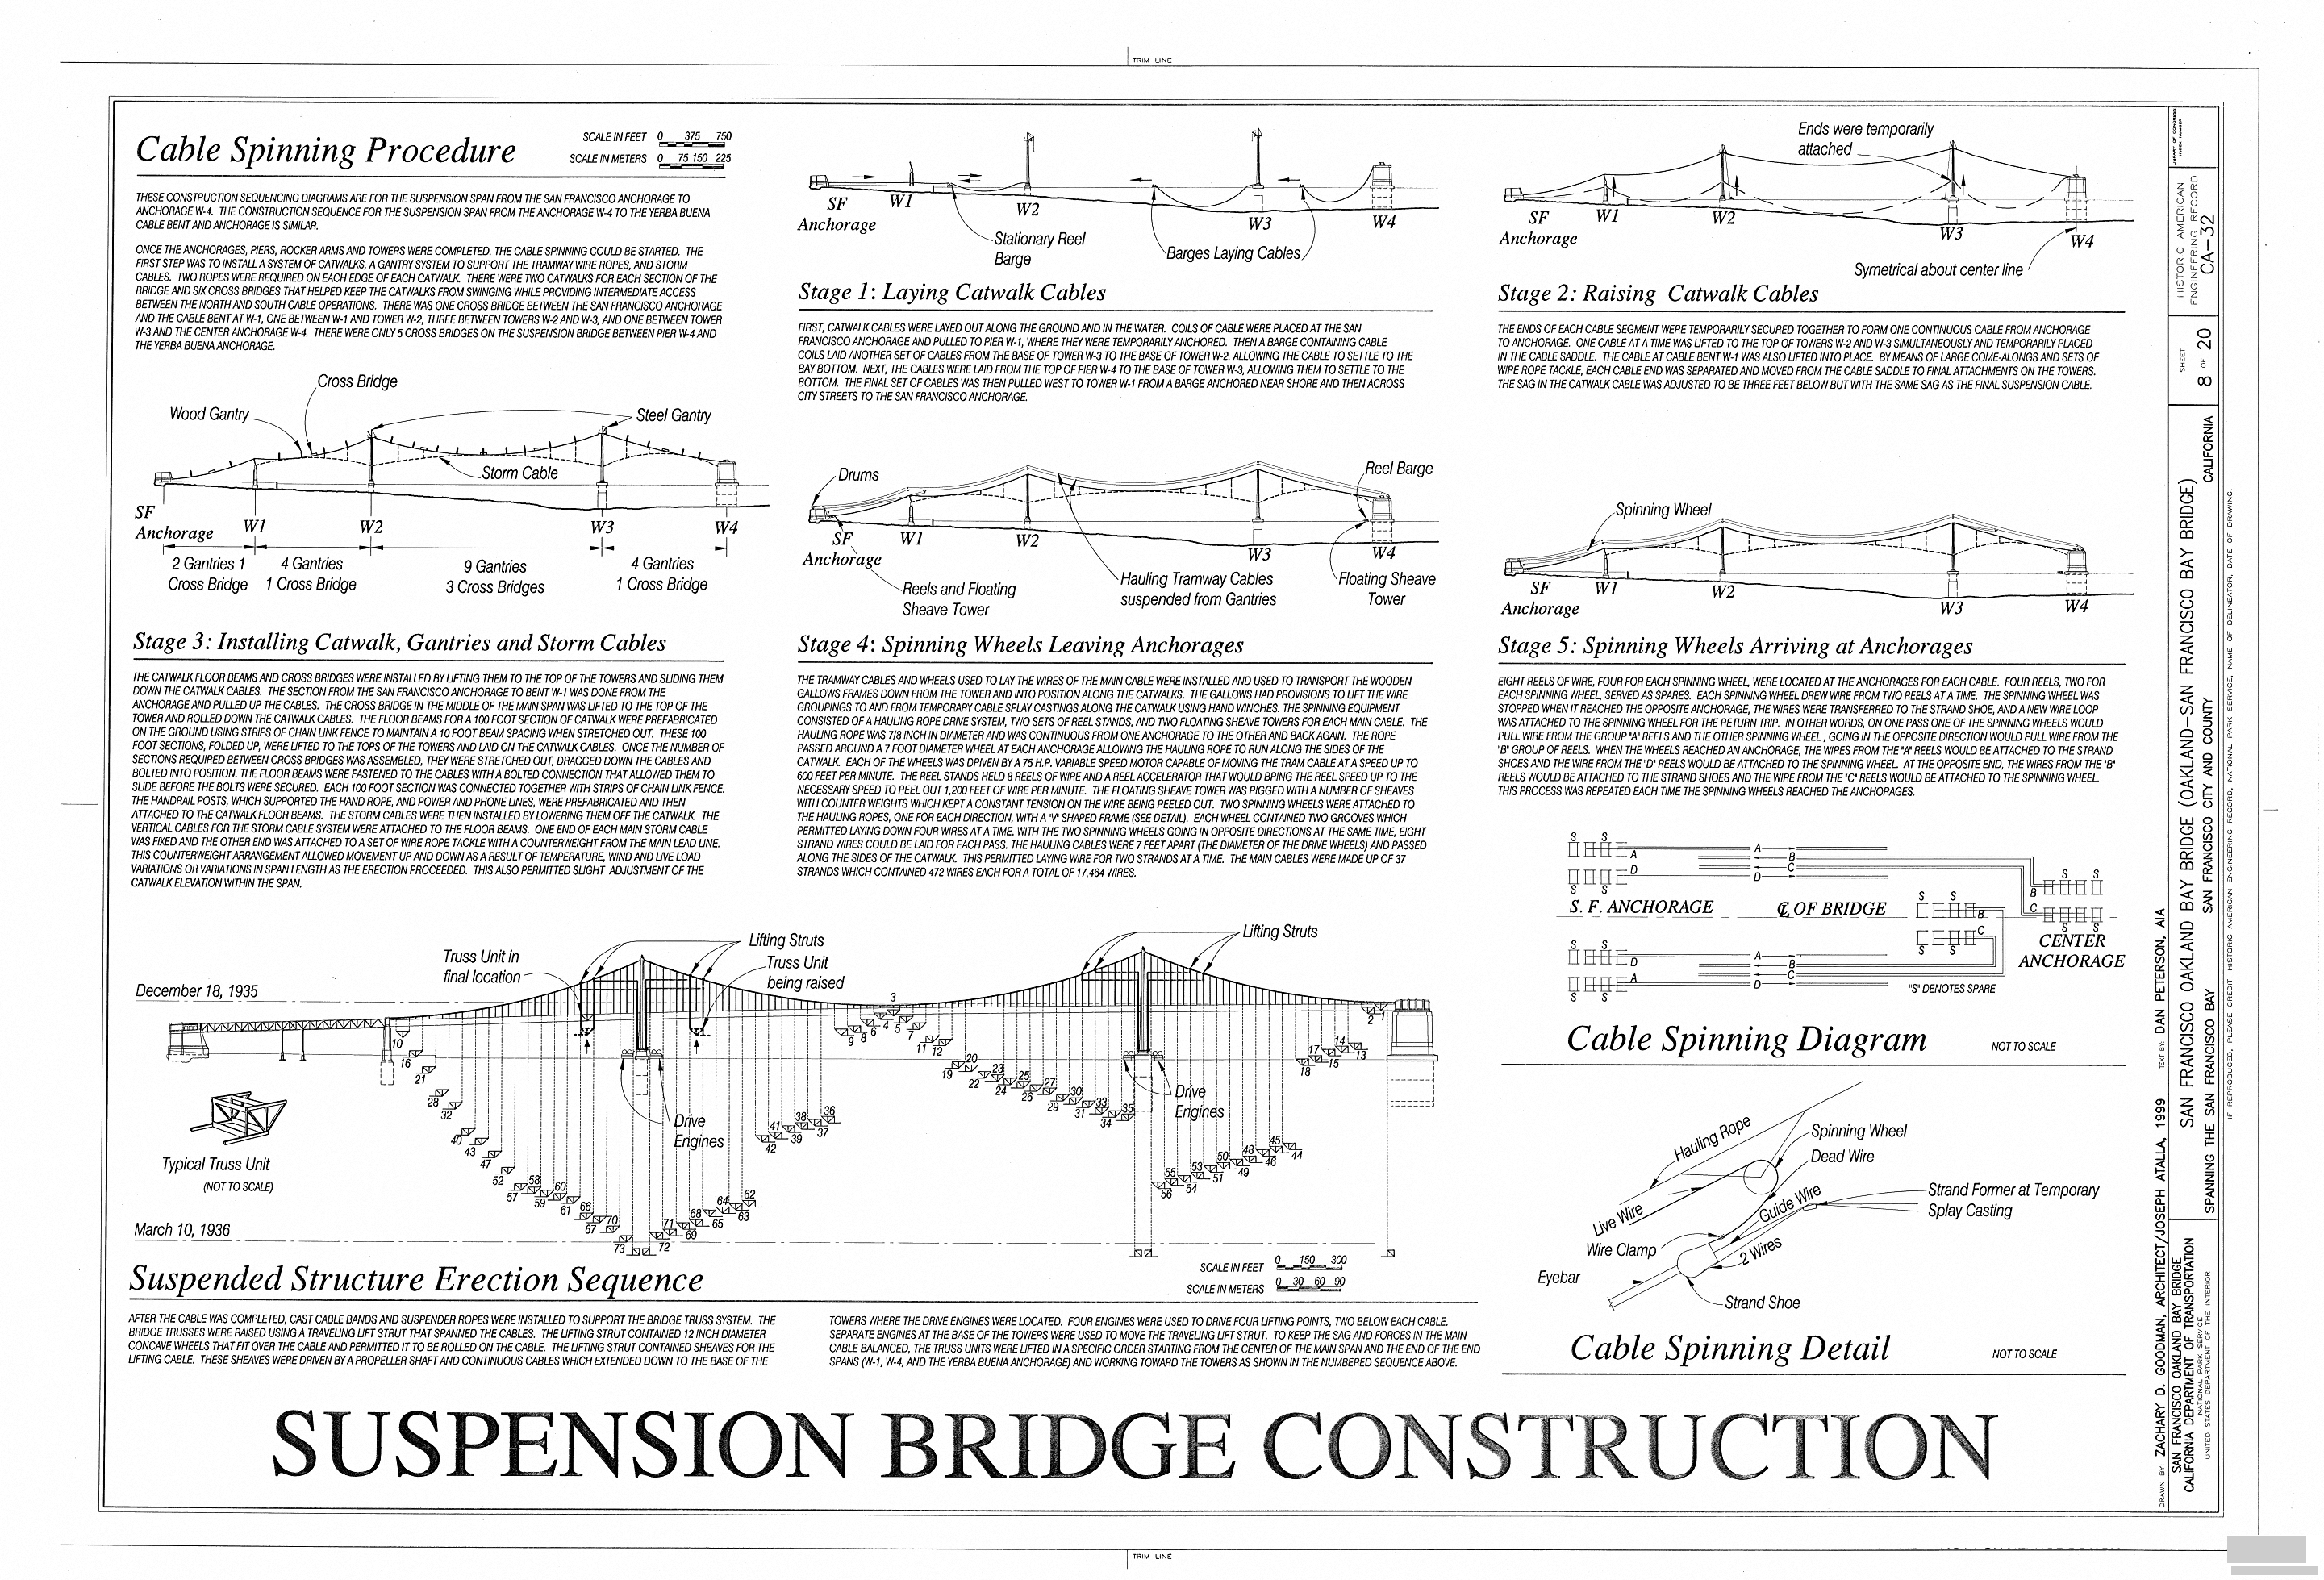 Suspension_Bridge_Construction-_Cable_Spanning_Procedure,_Suspended_Structure_Er.png